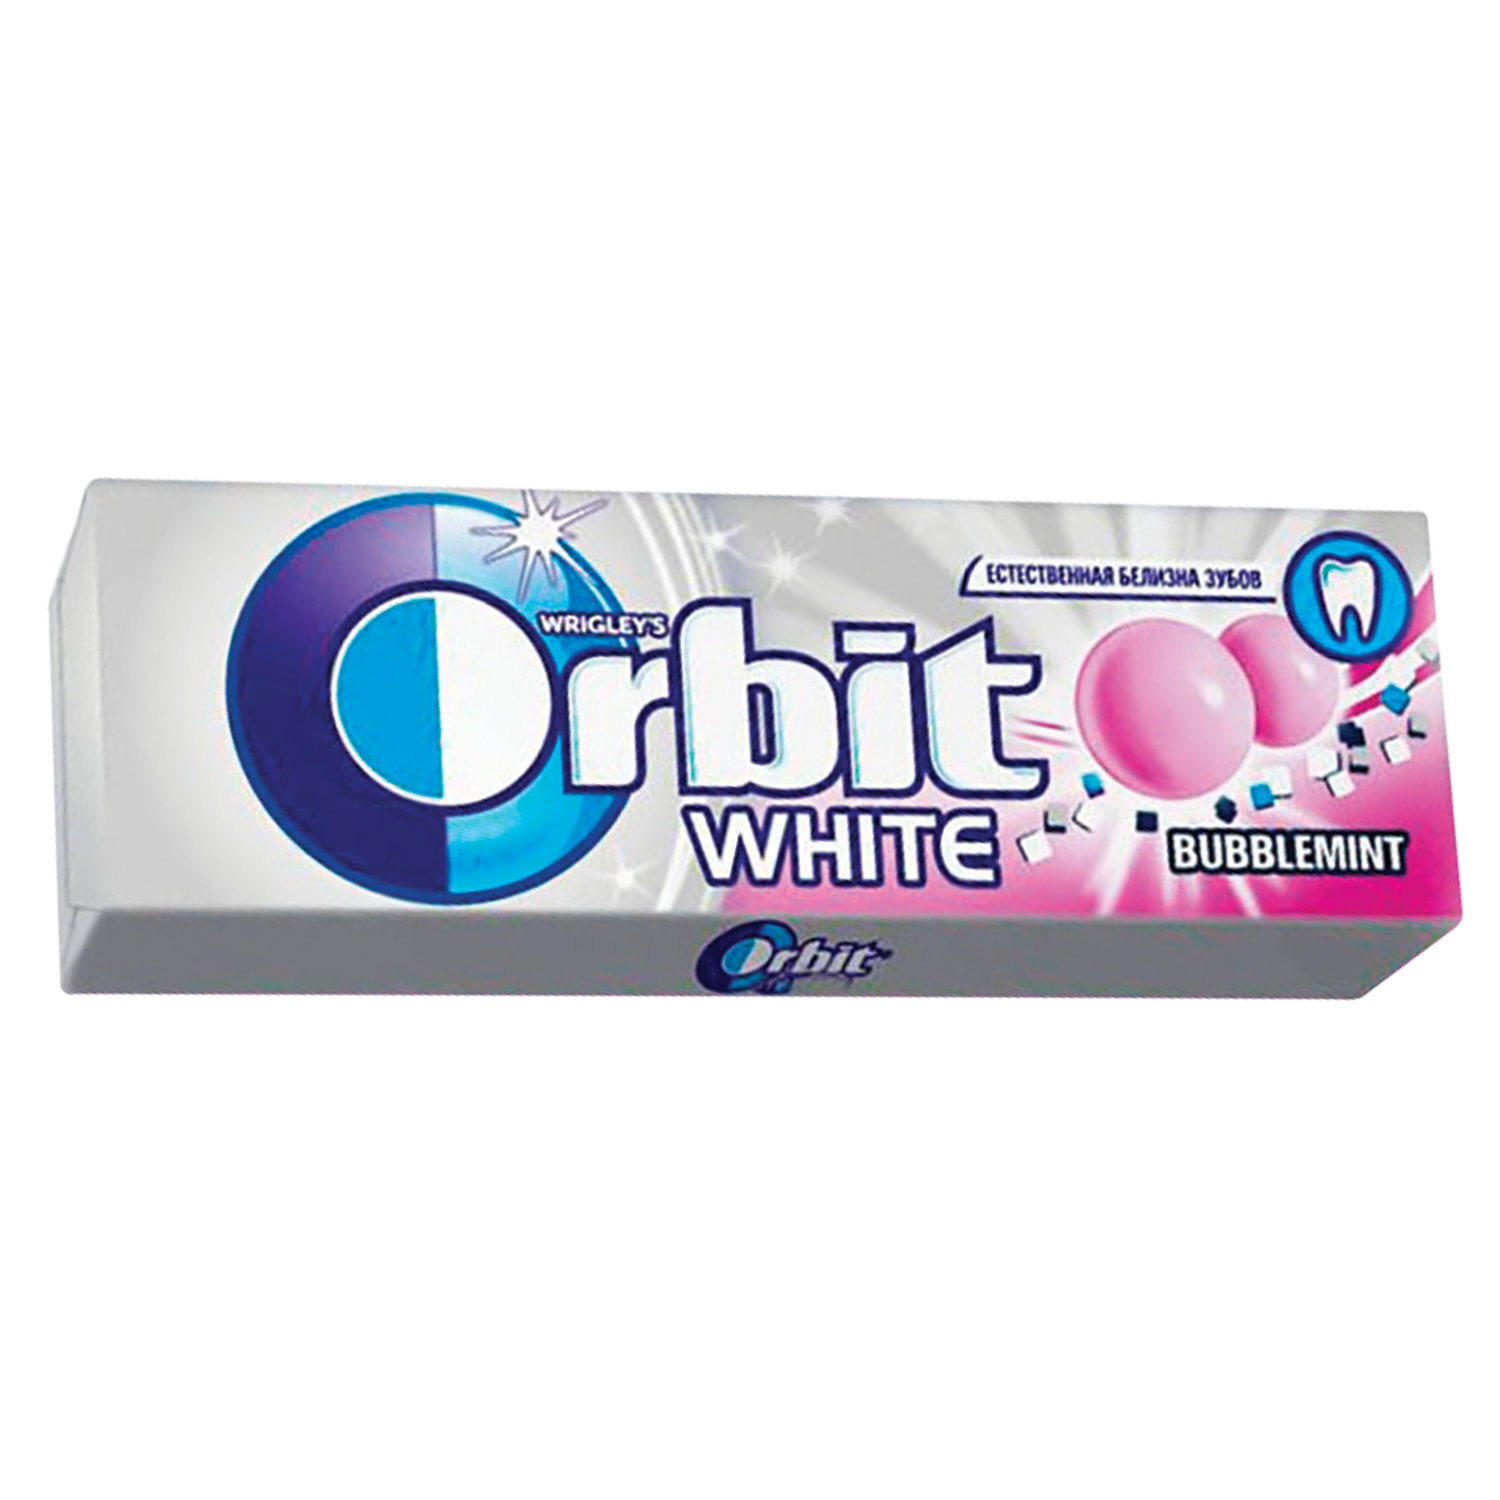 Орбит вход. Жевательная резинка Orbit White Bubblemint, 13,6г. Резинка жевательная Orbit баблминт, 13.6г. Orbit жевательная резинка Bubblemint 13.6. Жев.резинка Orbit белоснежный Bubblemint 13,6г.